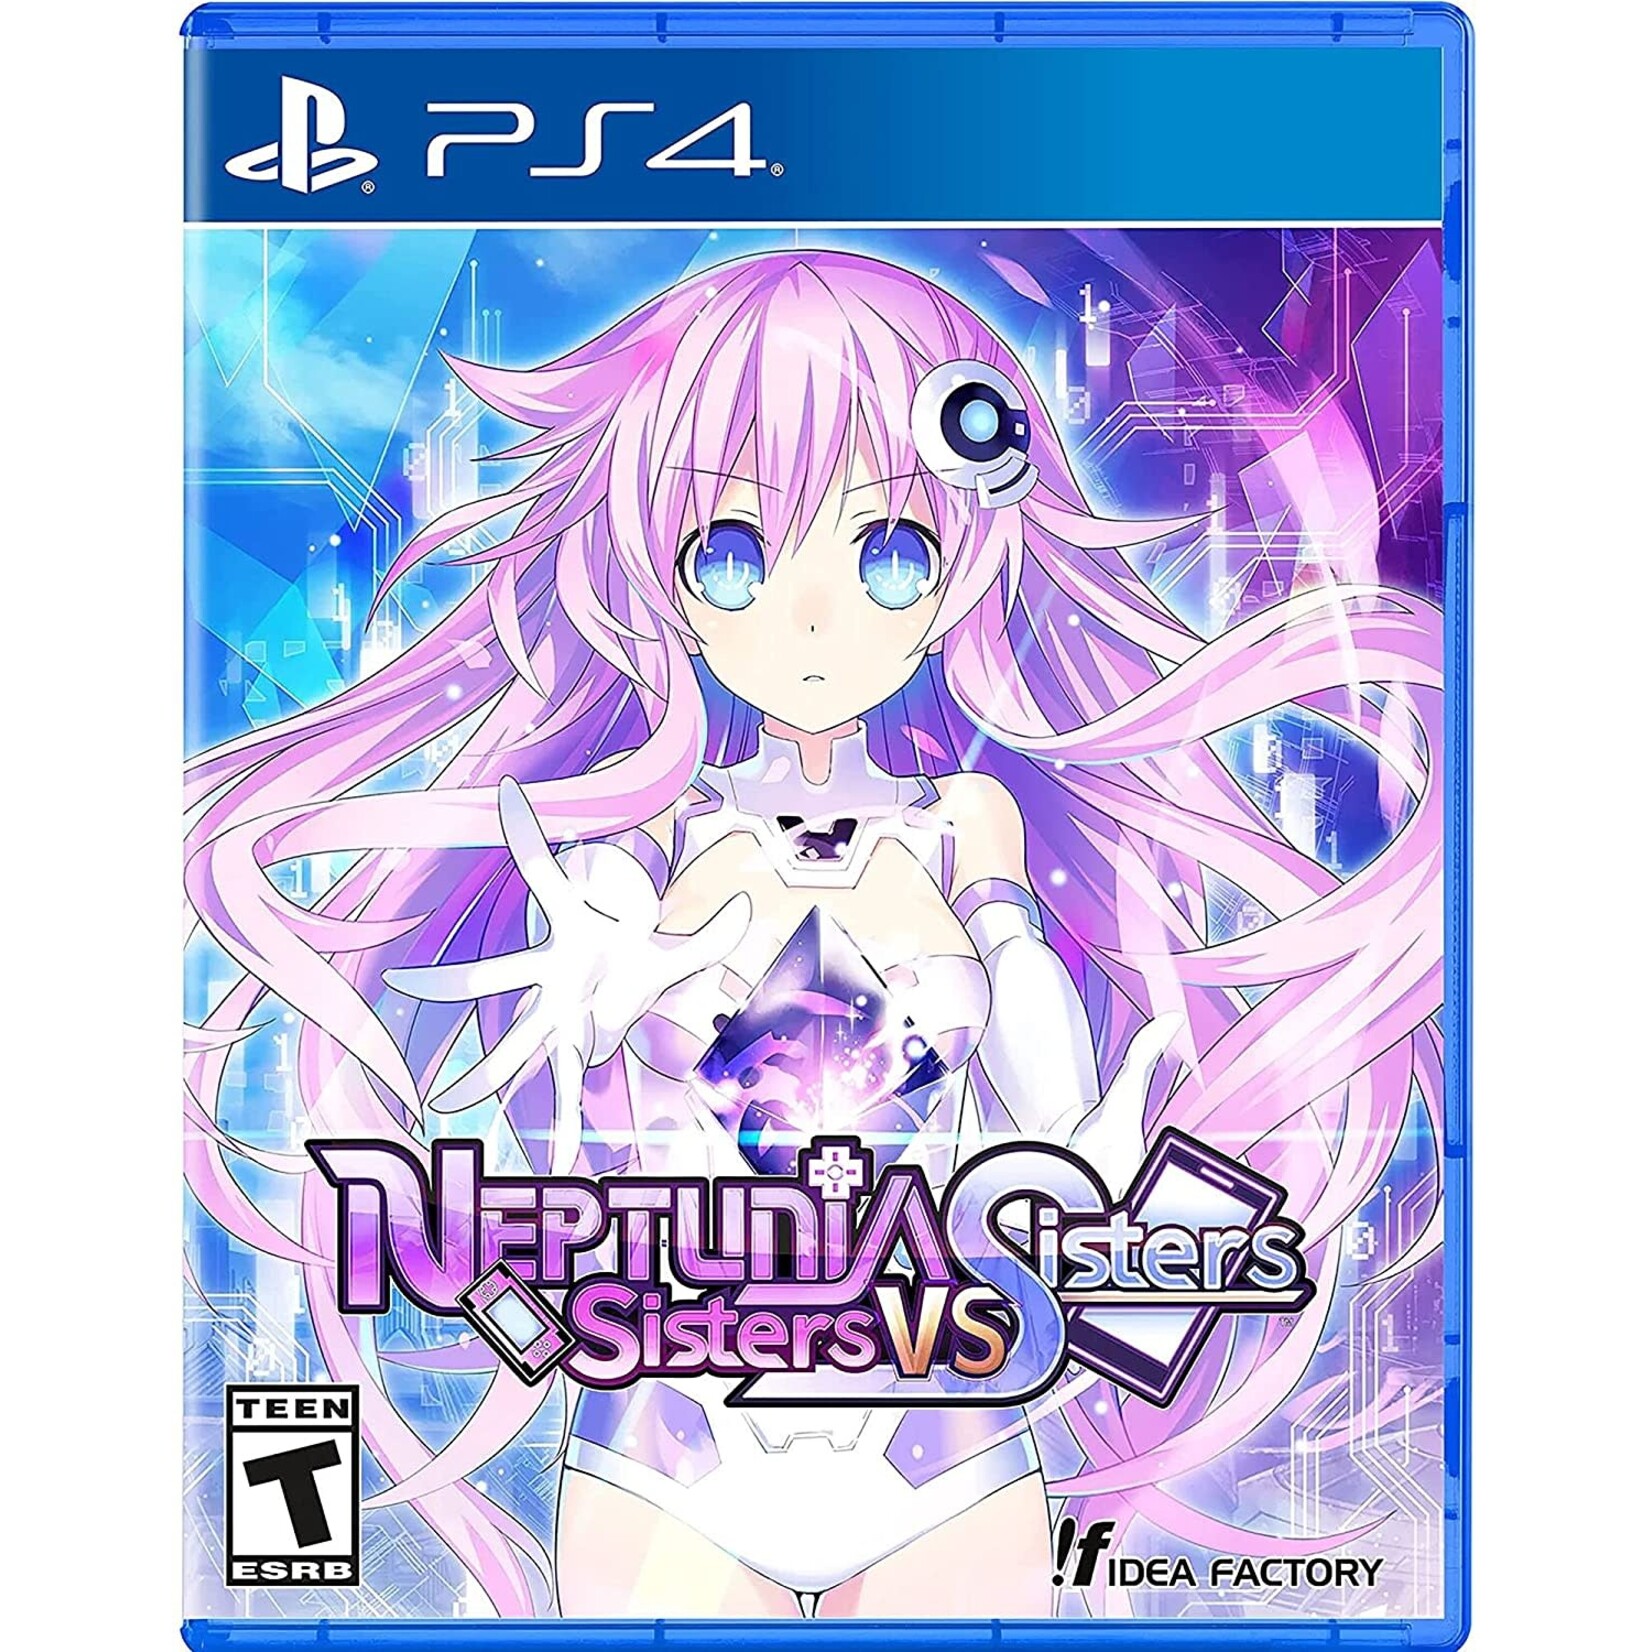 PS4-Neptunia Sisters VS Sisters